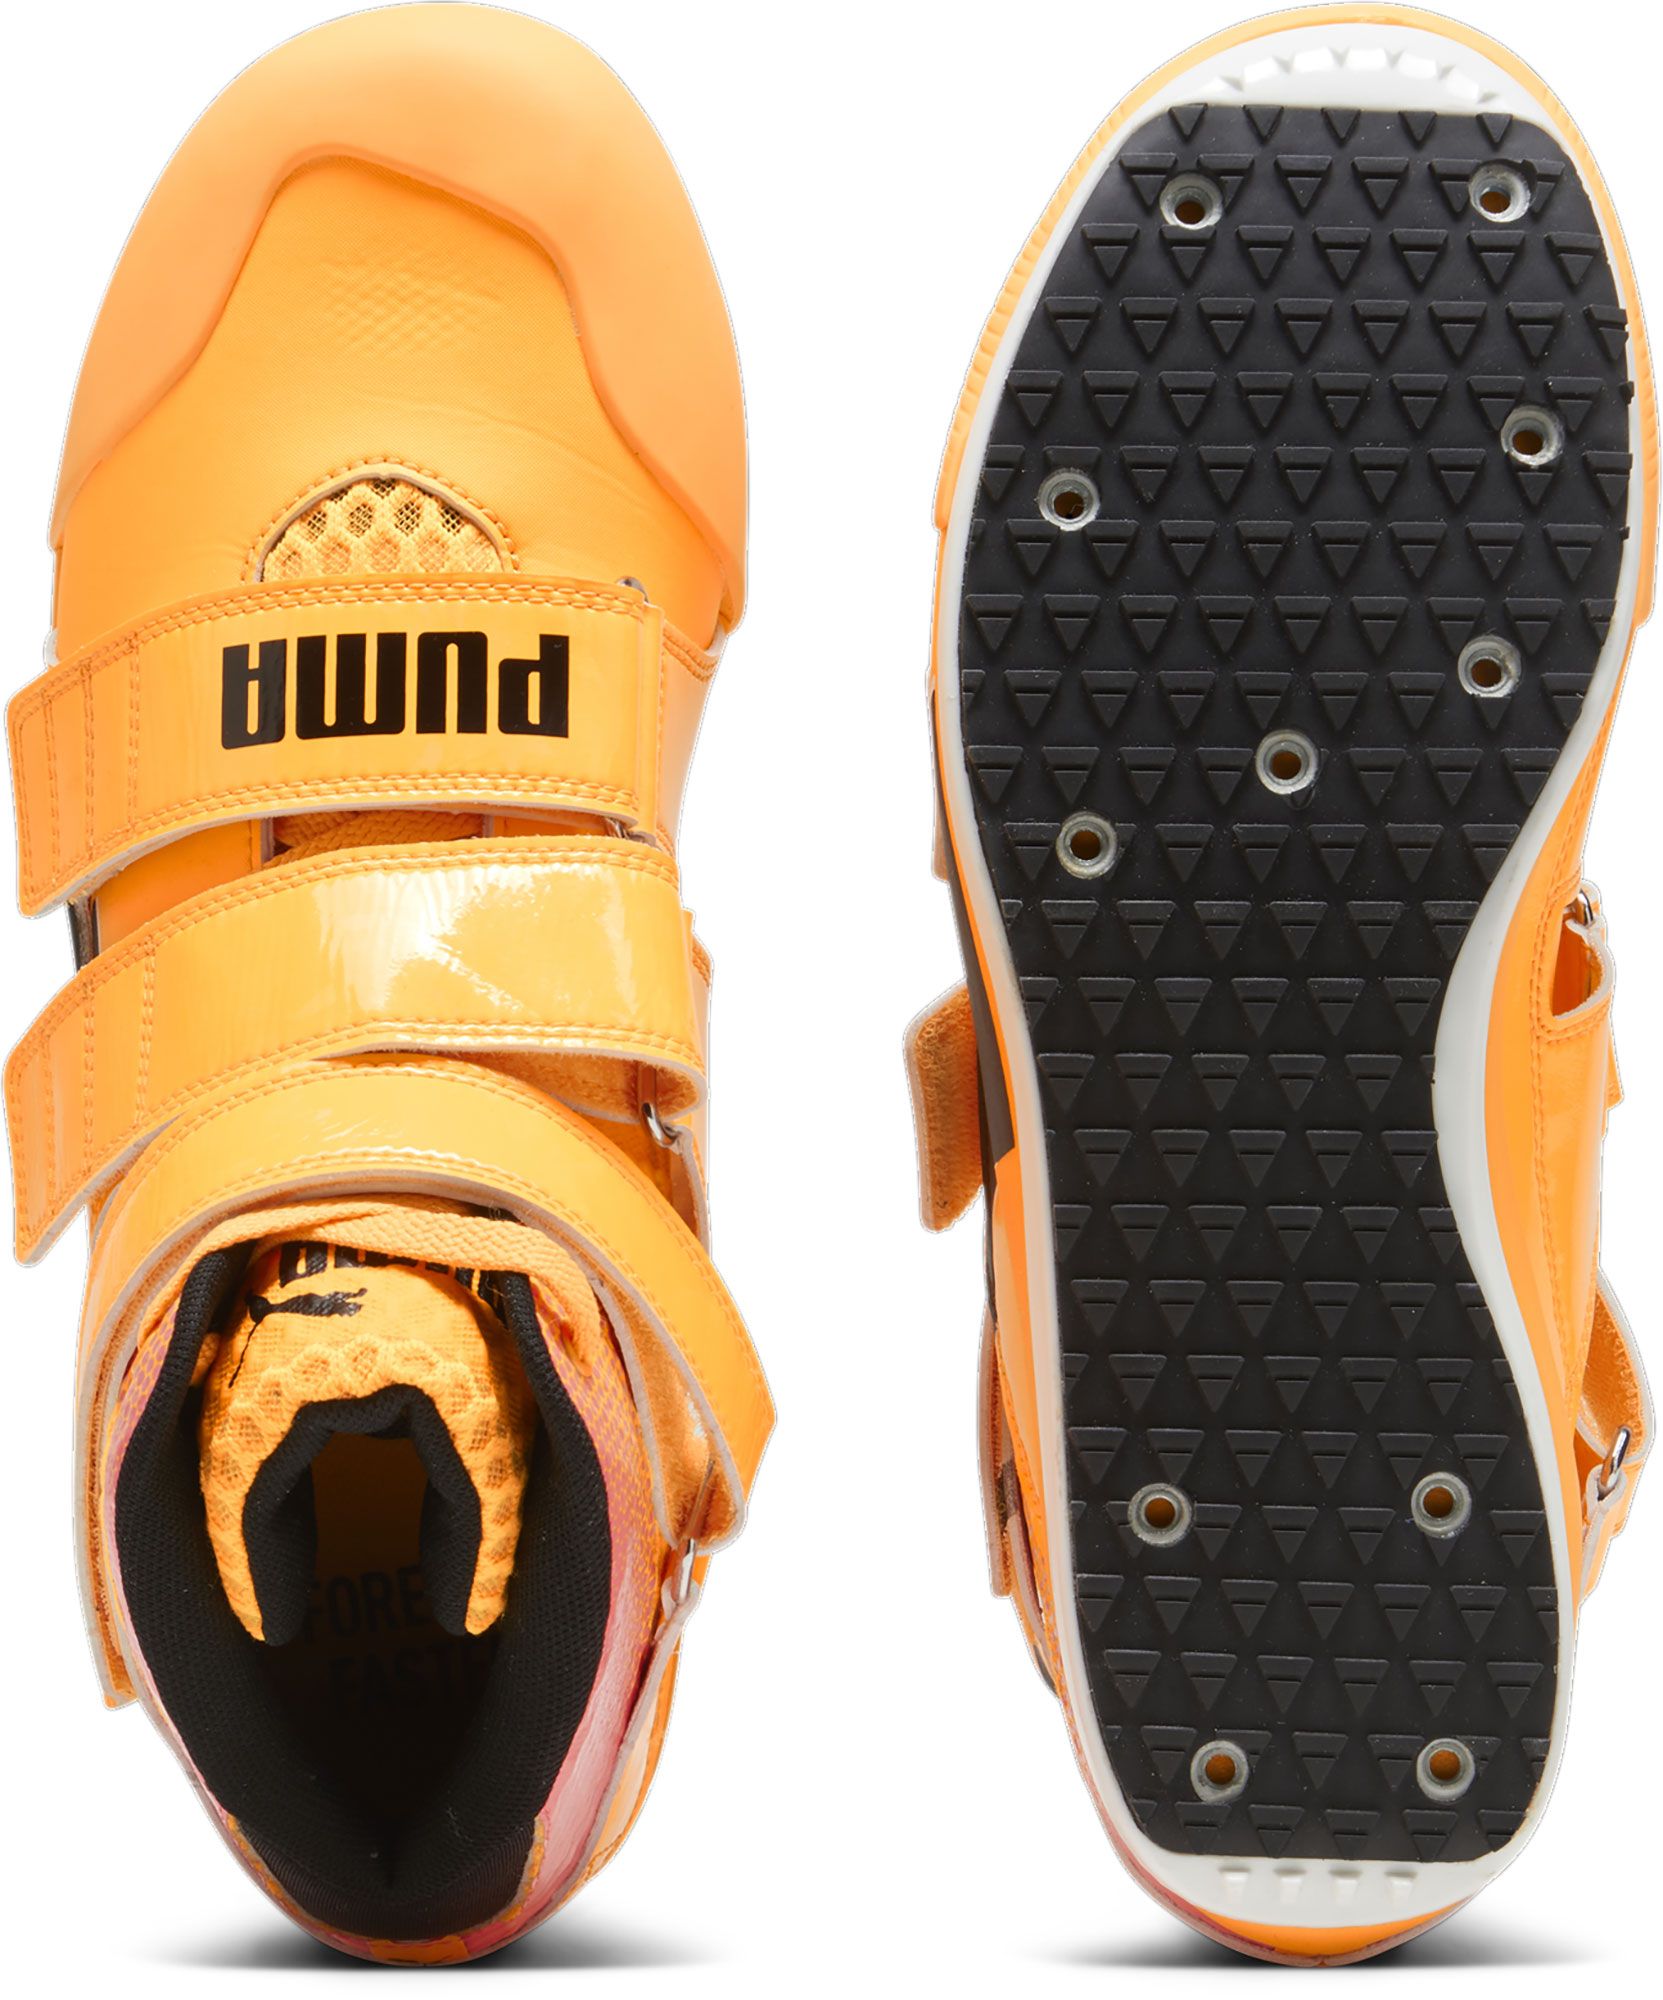 PUMA evoSPEED Javelin Elite 2.0 Track and Field Shoes | The Market 